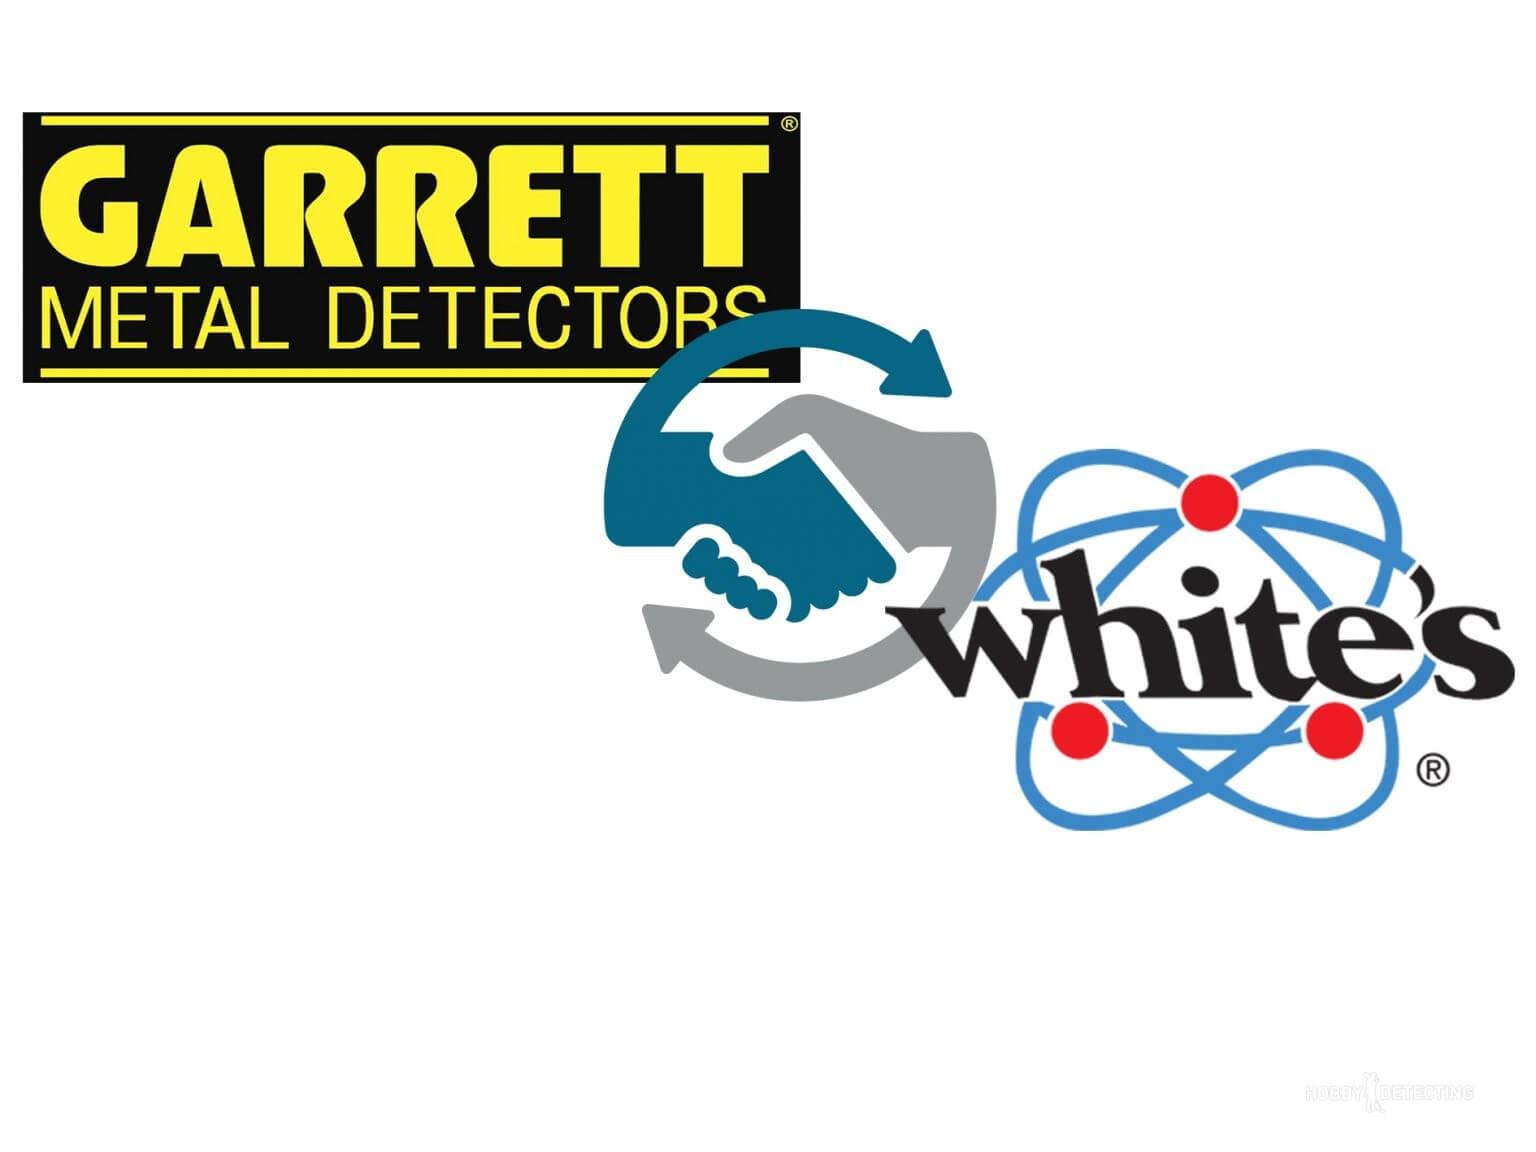 Garrett Metal Detectors buys White Electronics assets